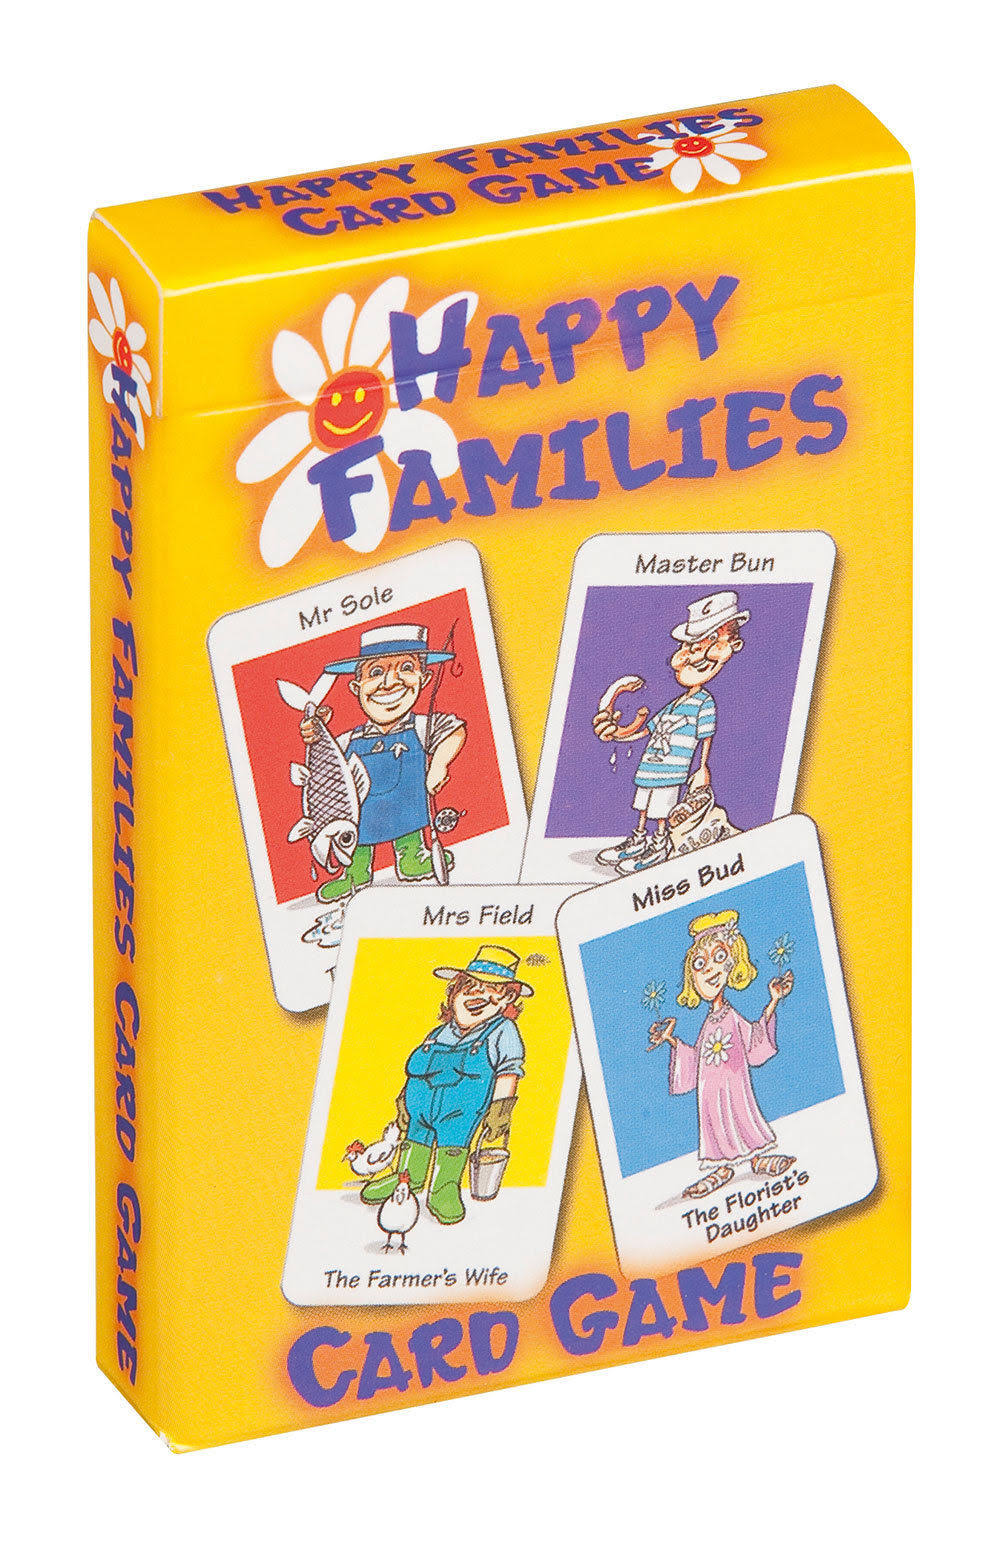 Children's Card Games - Happy Families